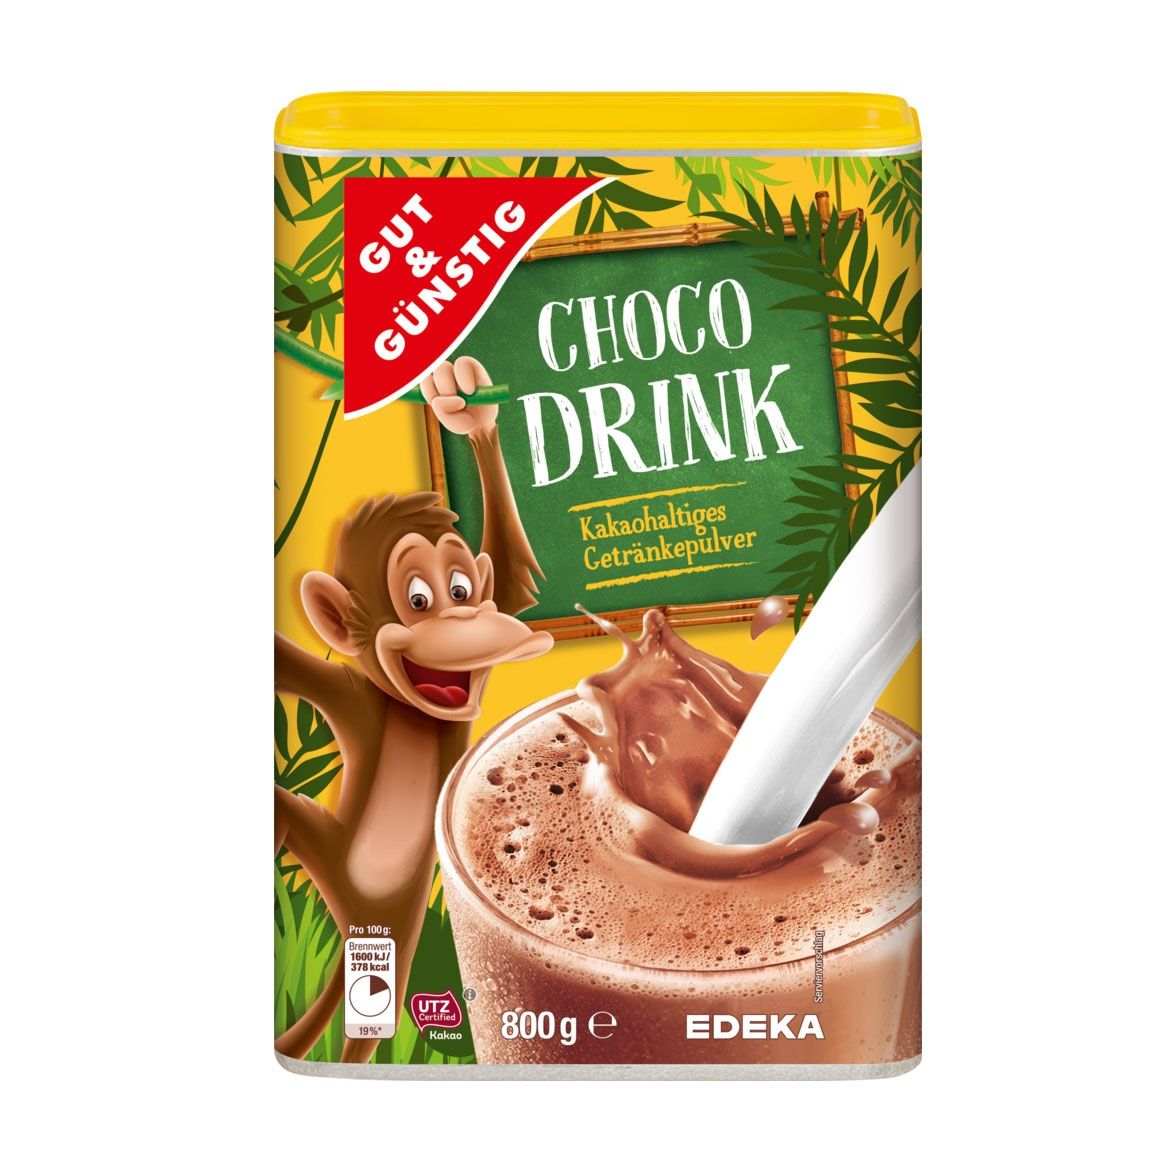 bot cacao choco drink gut gunstig edeka 800g